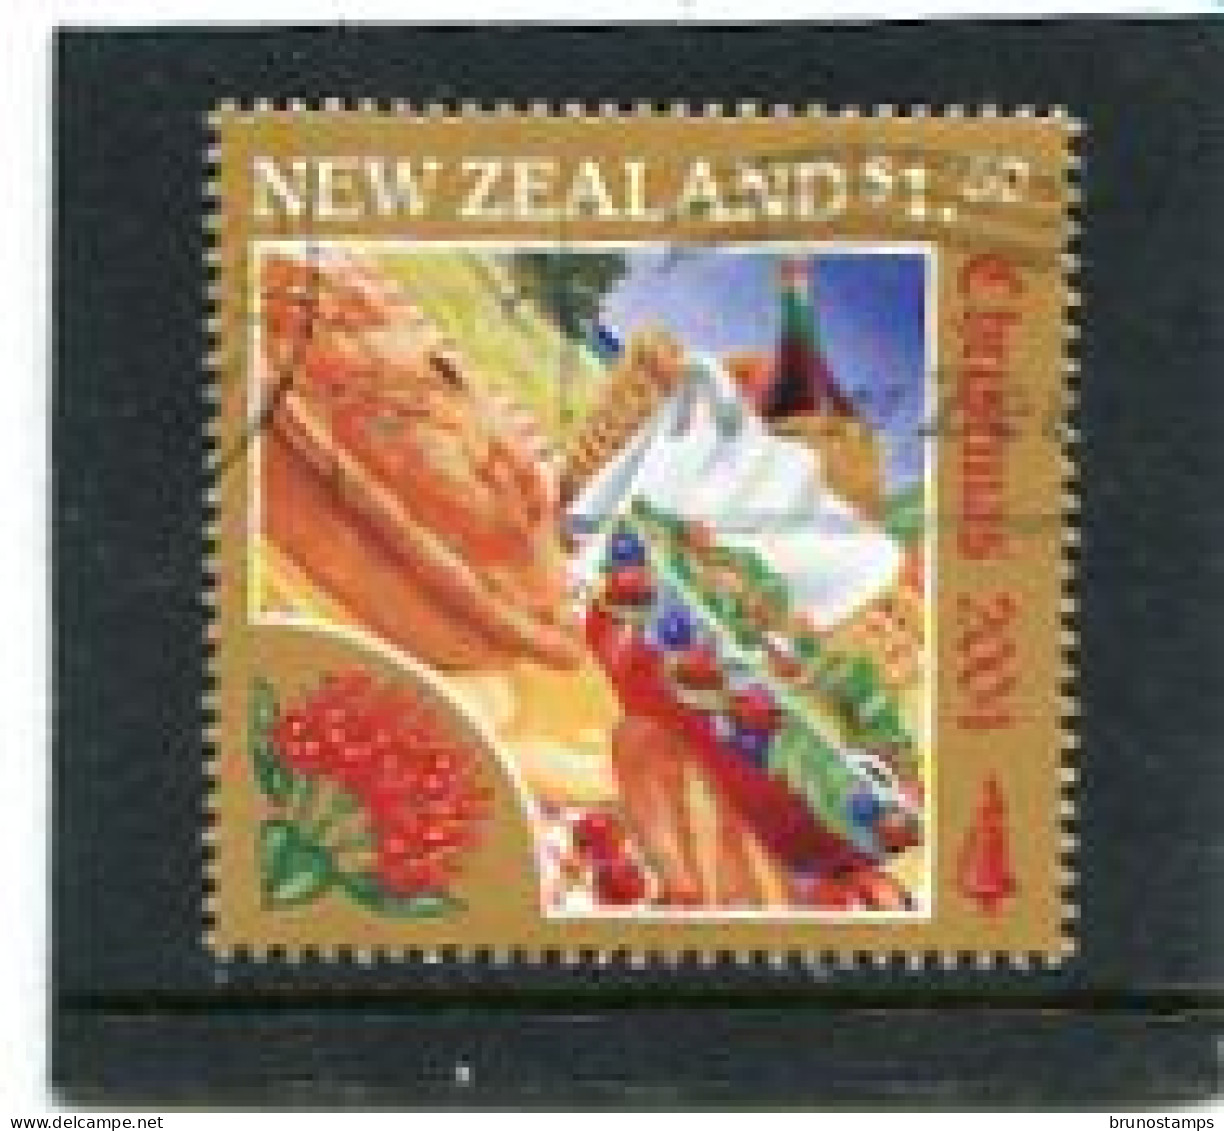 NEW ZEALAND - 2004  1.50$  CHRISTMAS  FINE  USED - Usati